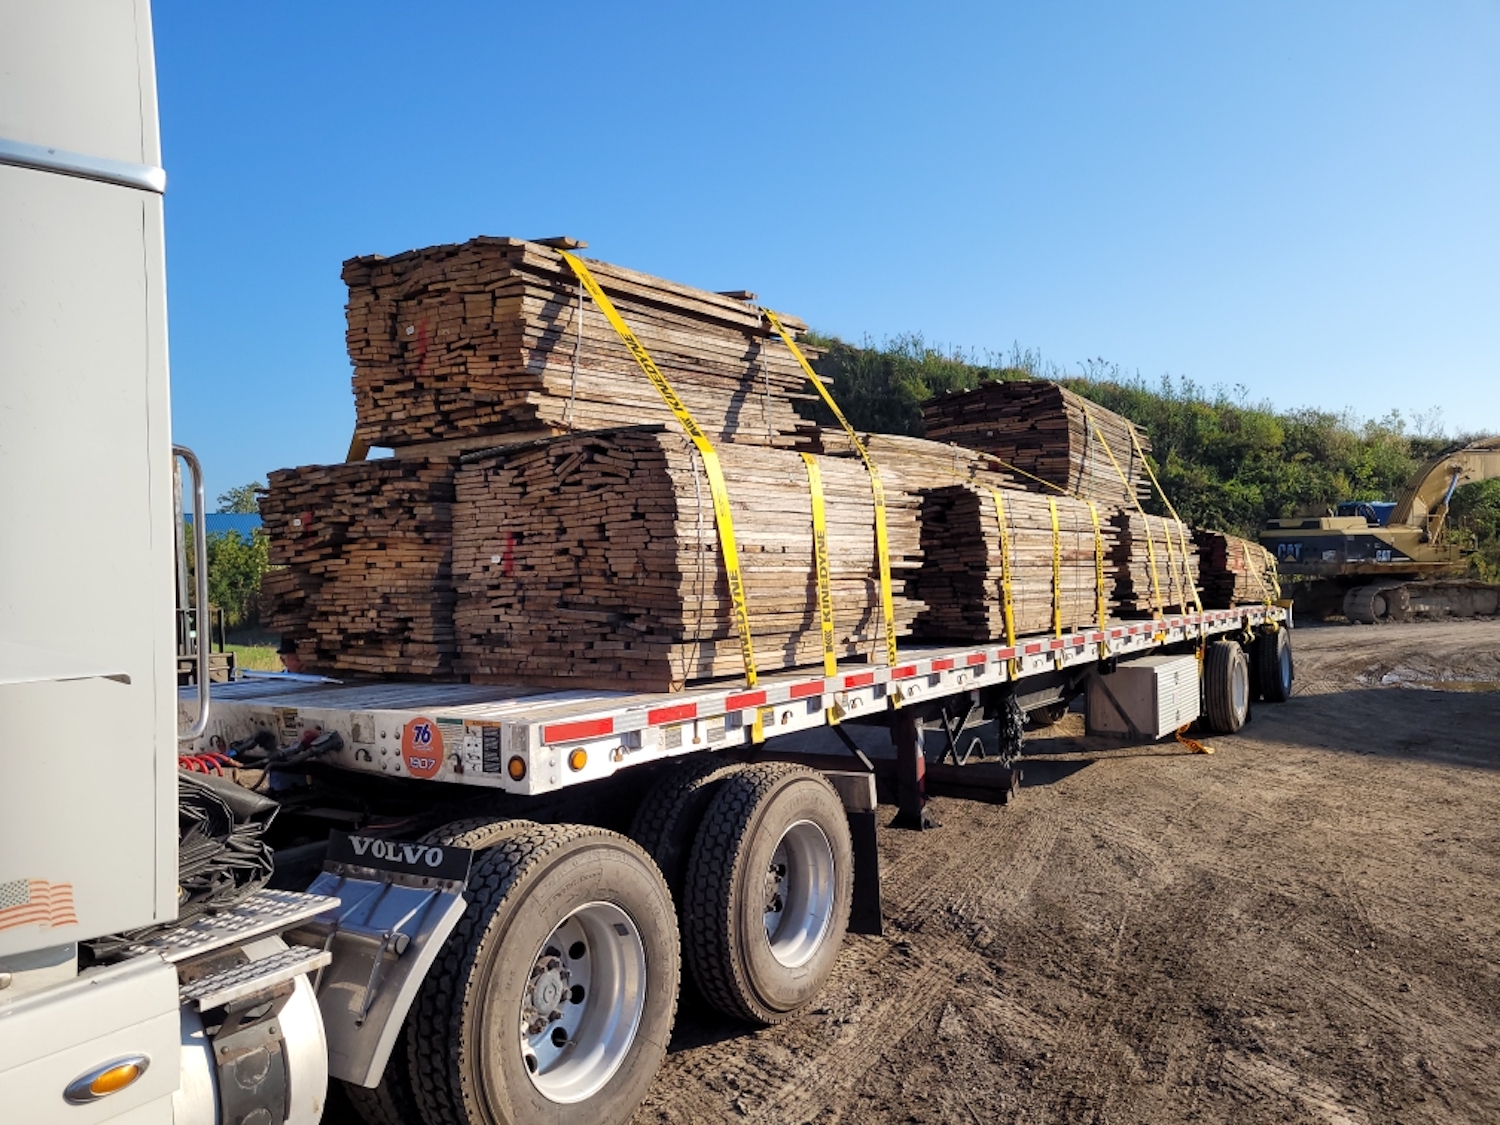 A semi load of reclaimed lumber